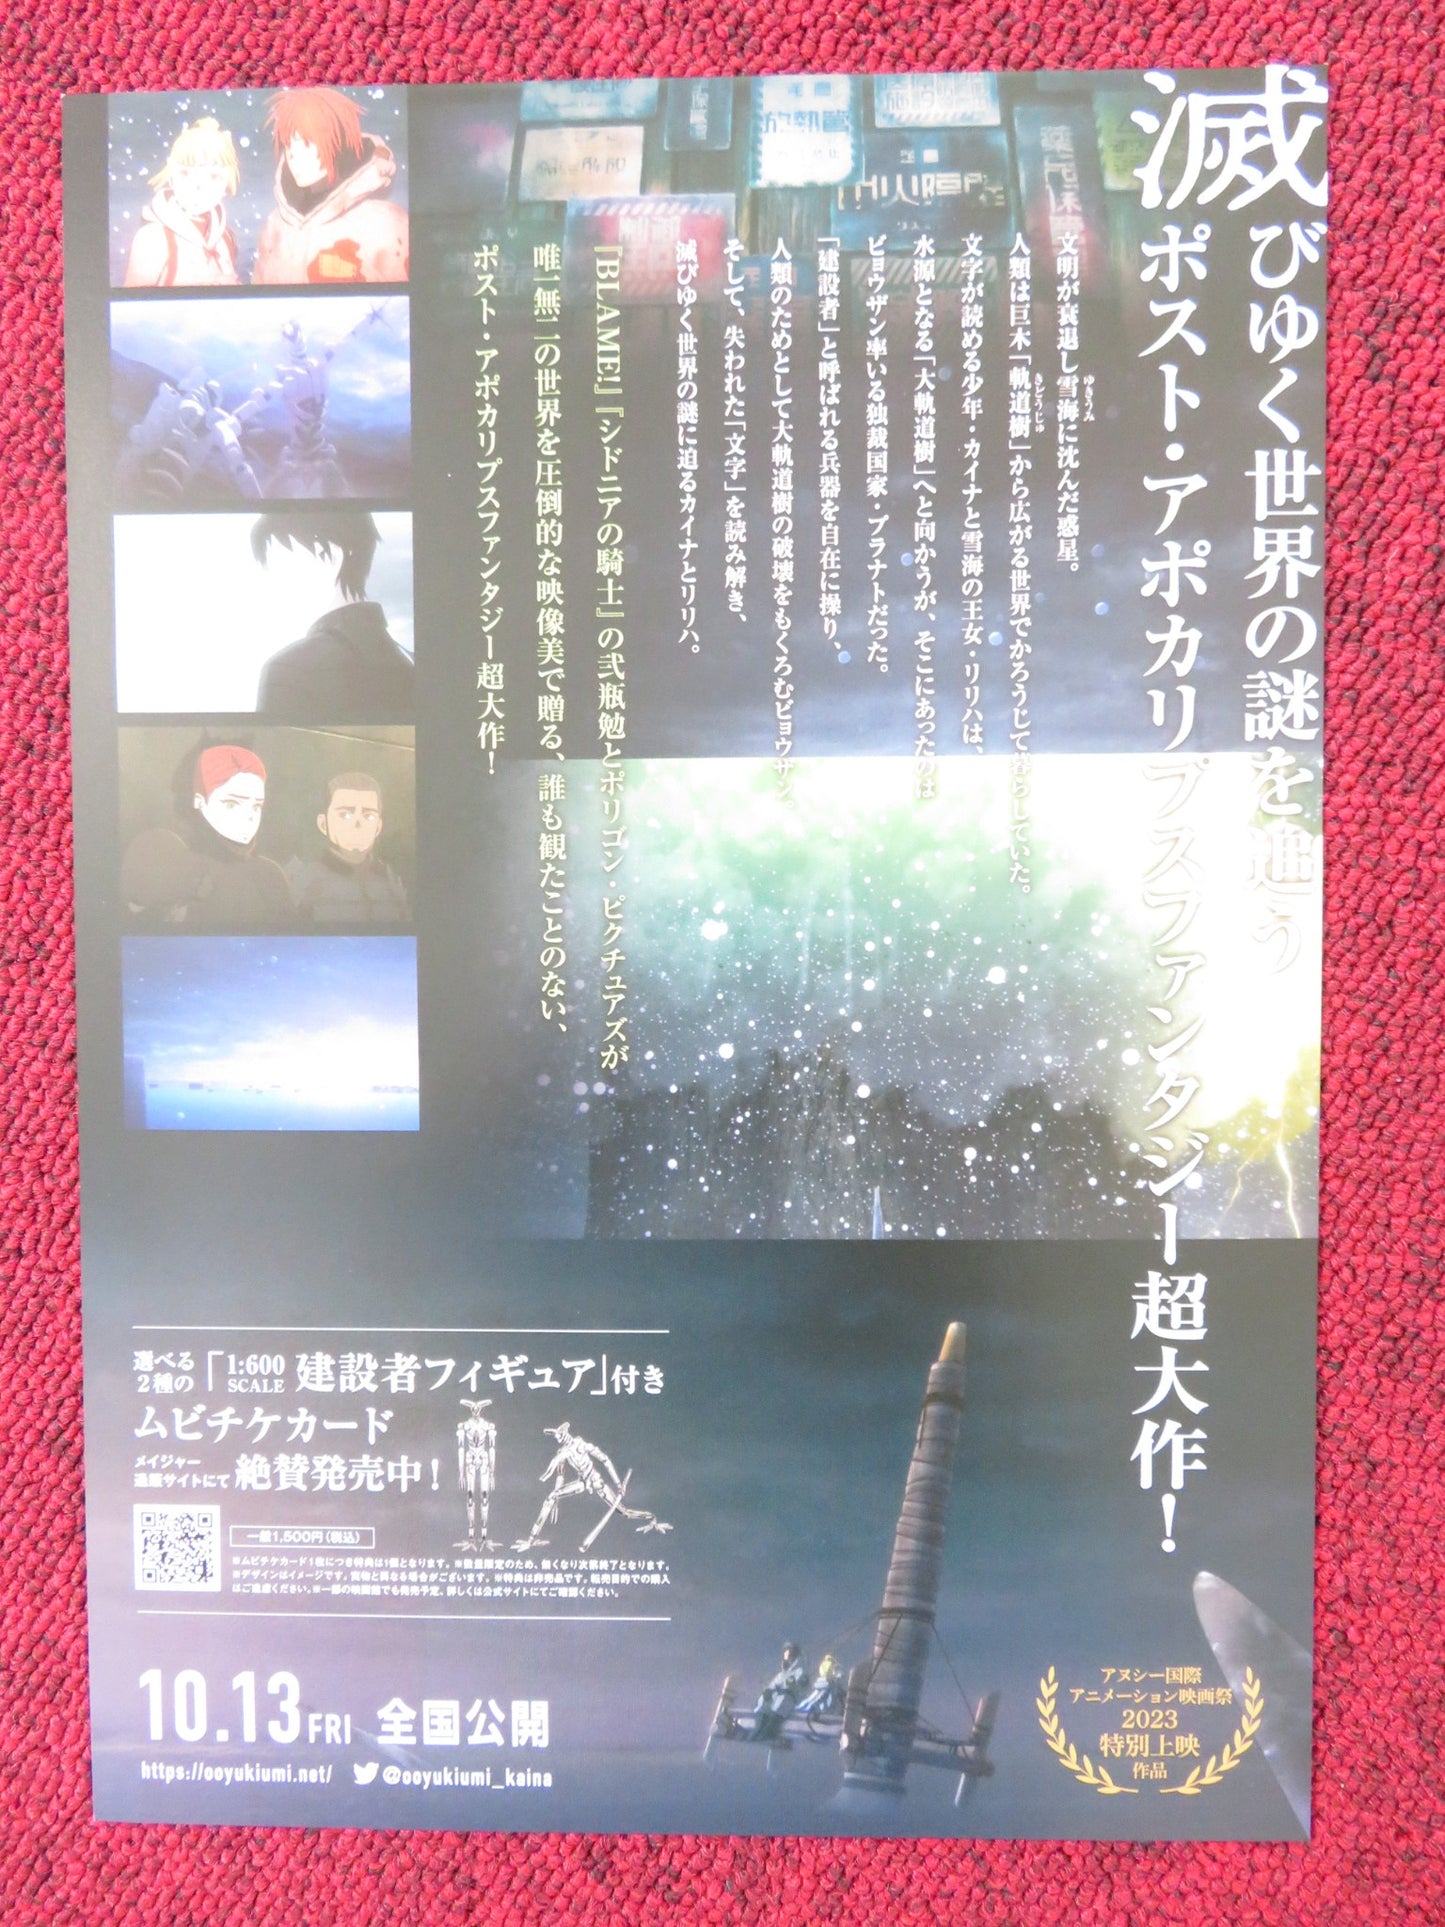 KAINA OF THE GREAT SNOW SEA: STAR SAGE JAPANESE CHIRASHI (B5) POSTER ANDO 2023